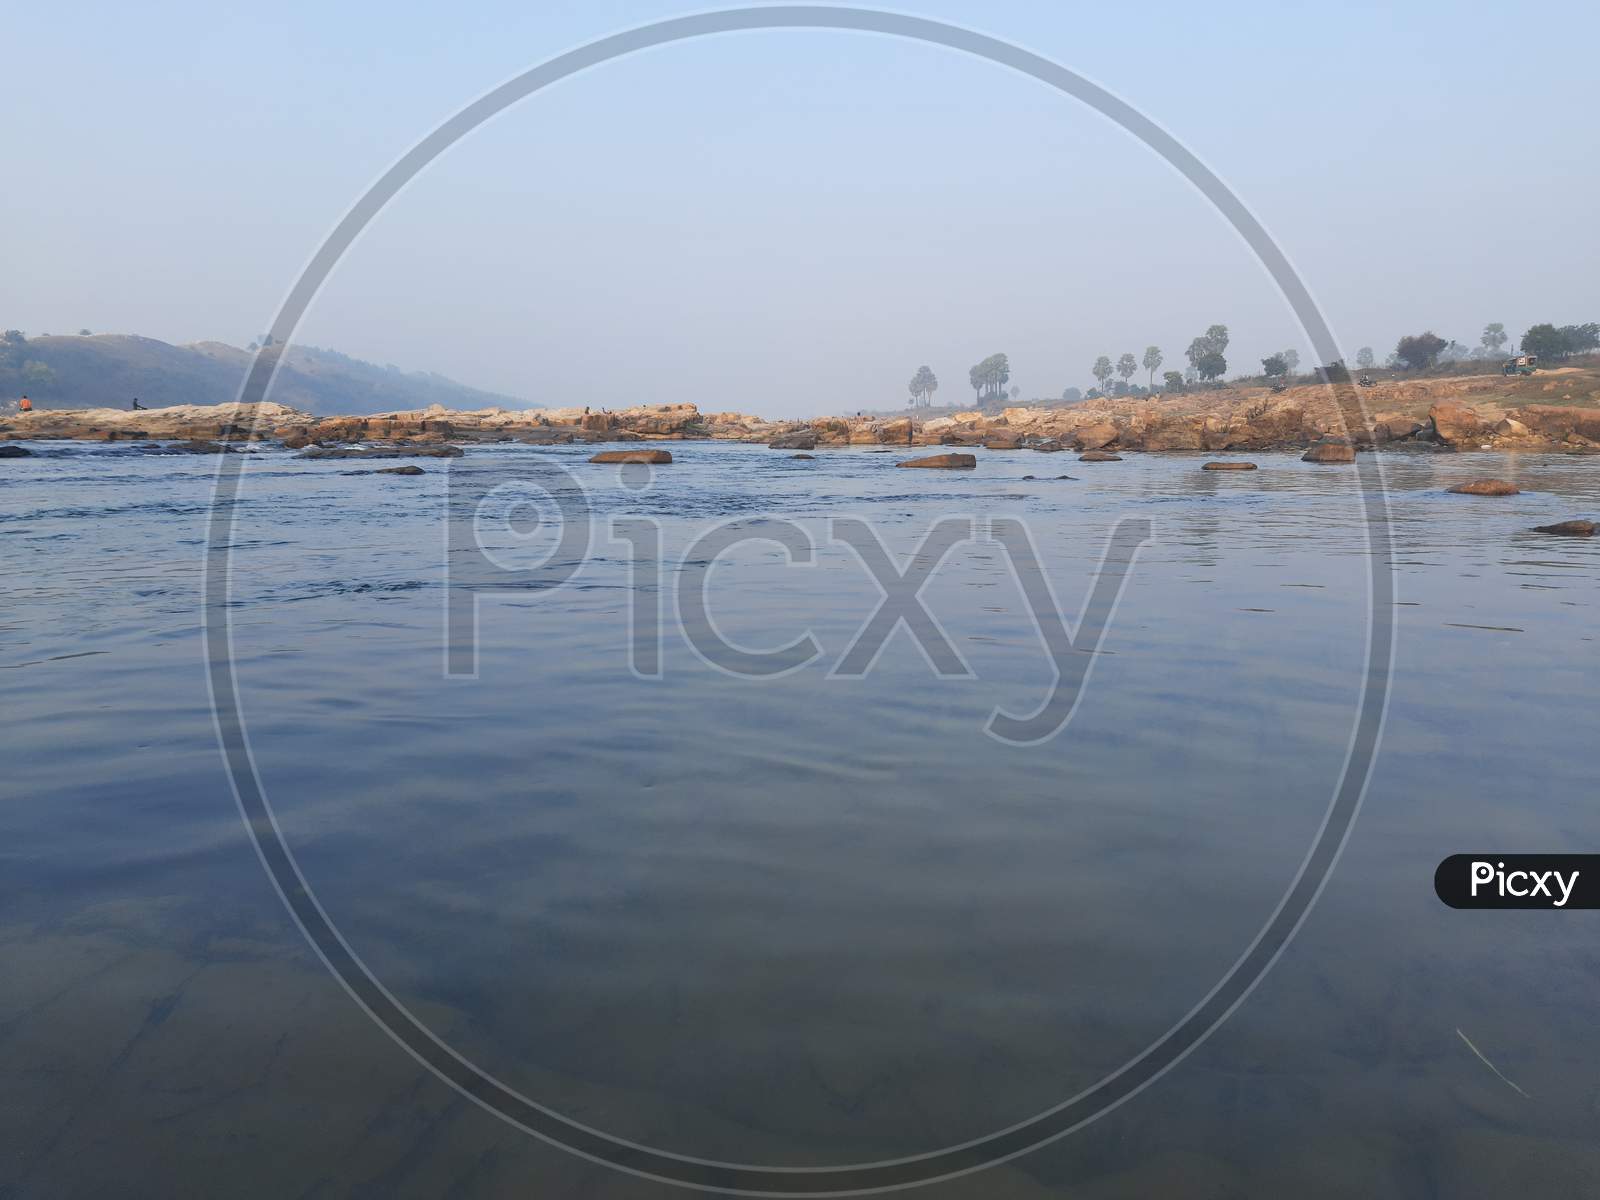 Barakar river Jharkhand India.